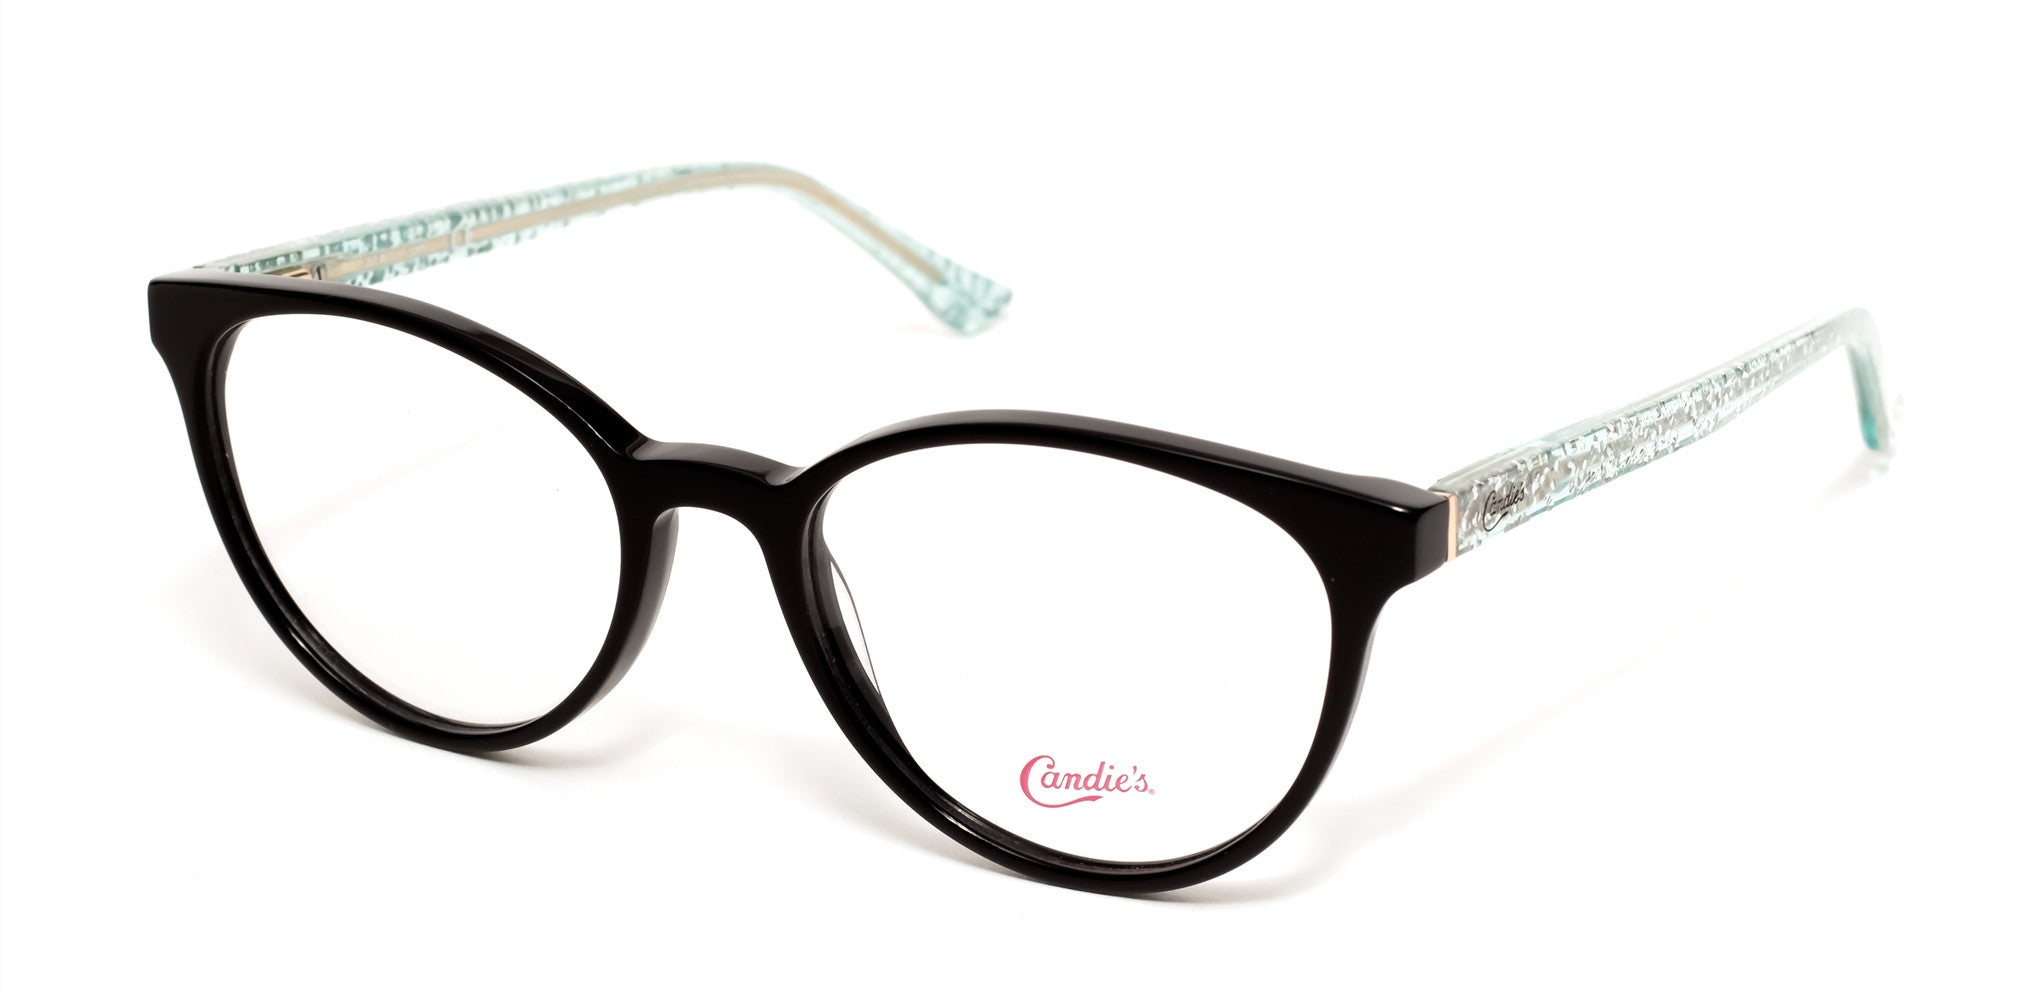 Candies CA0165 Round Eyeglasses 001-001 - Shiny Black